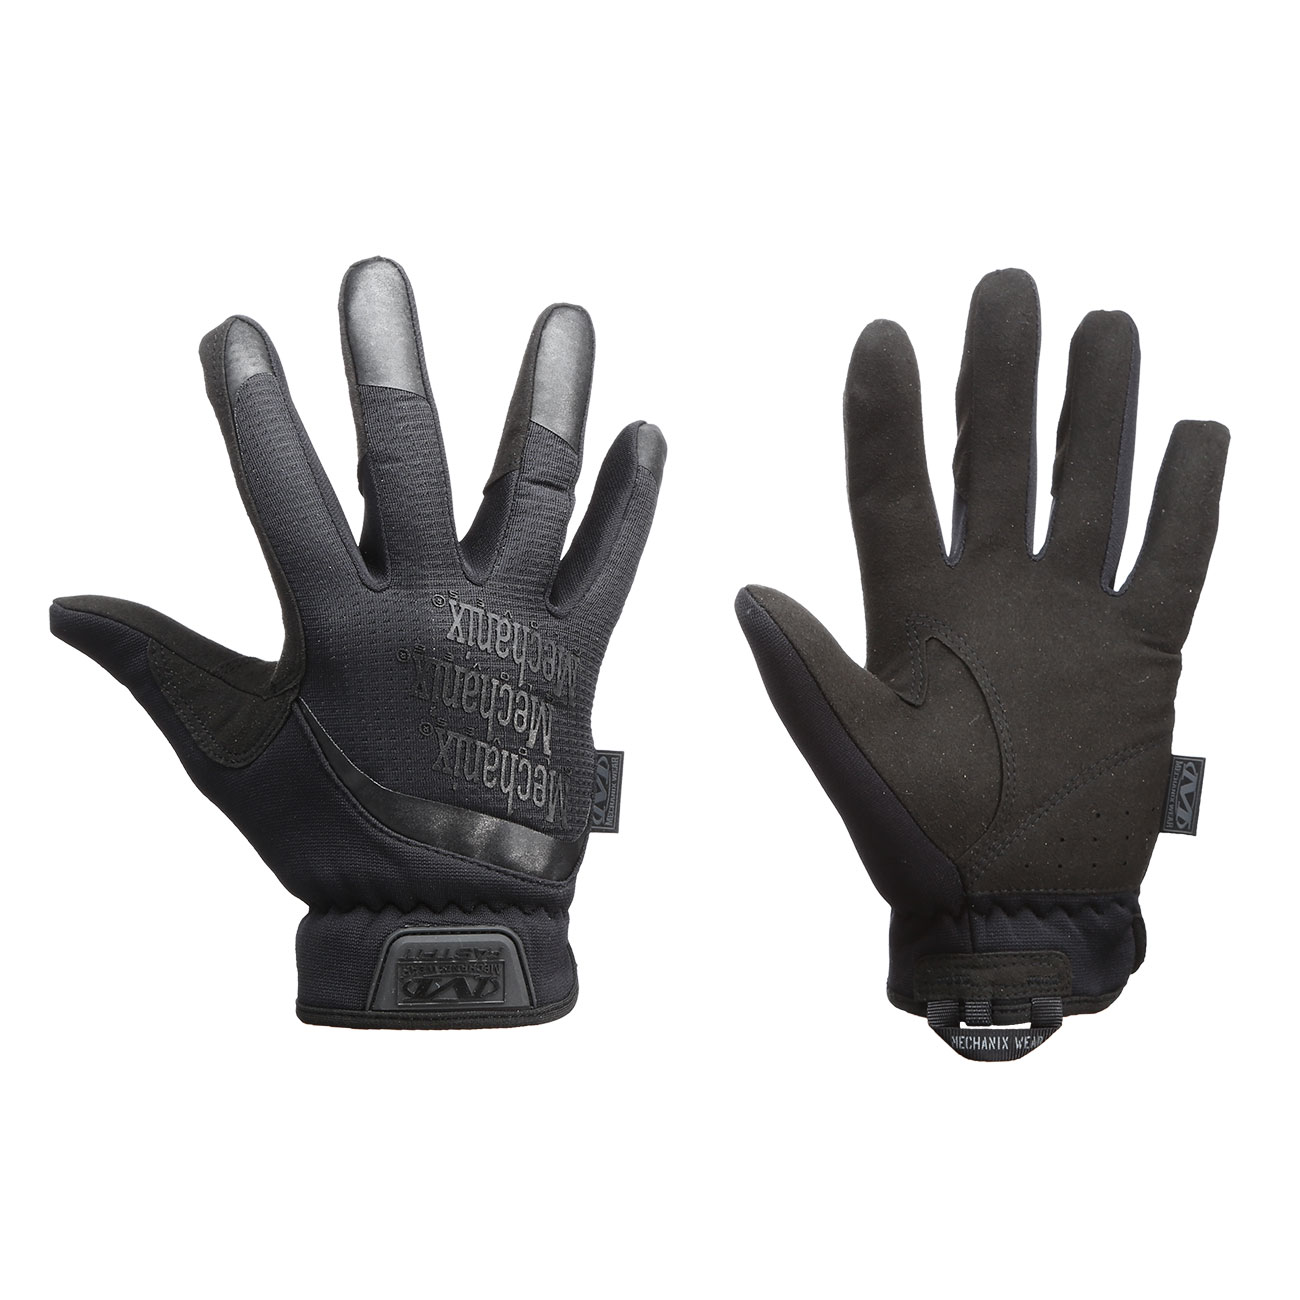 Mechanix Wear Antistatic FastFit Glove Handschuhe covert